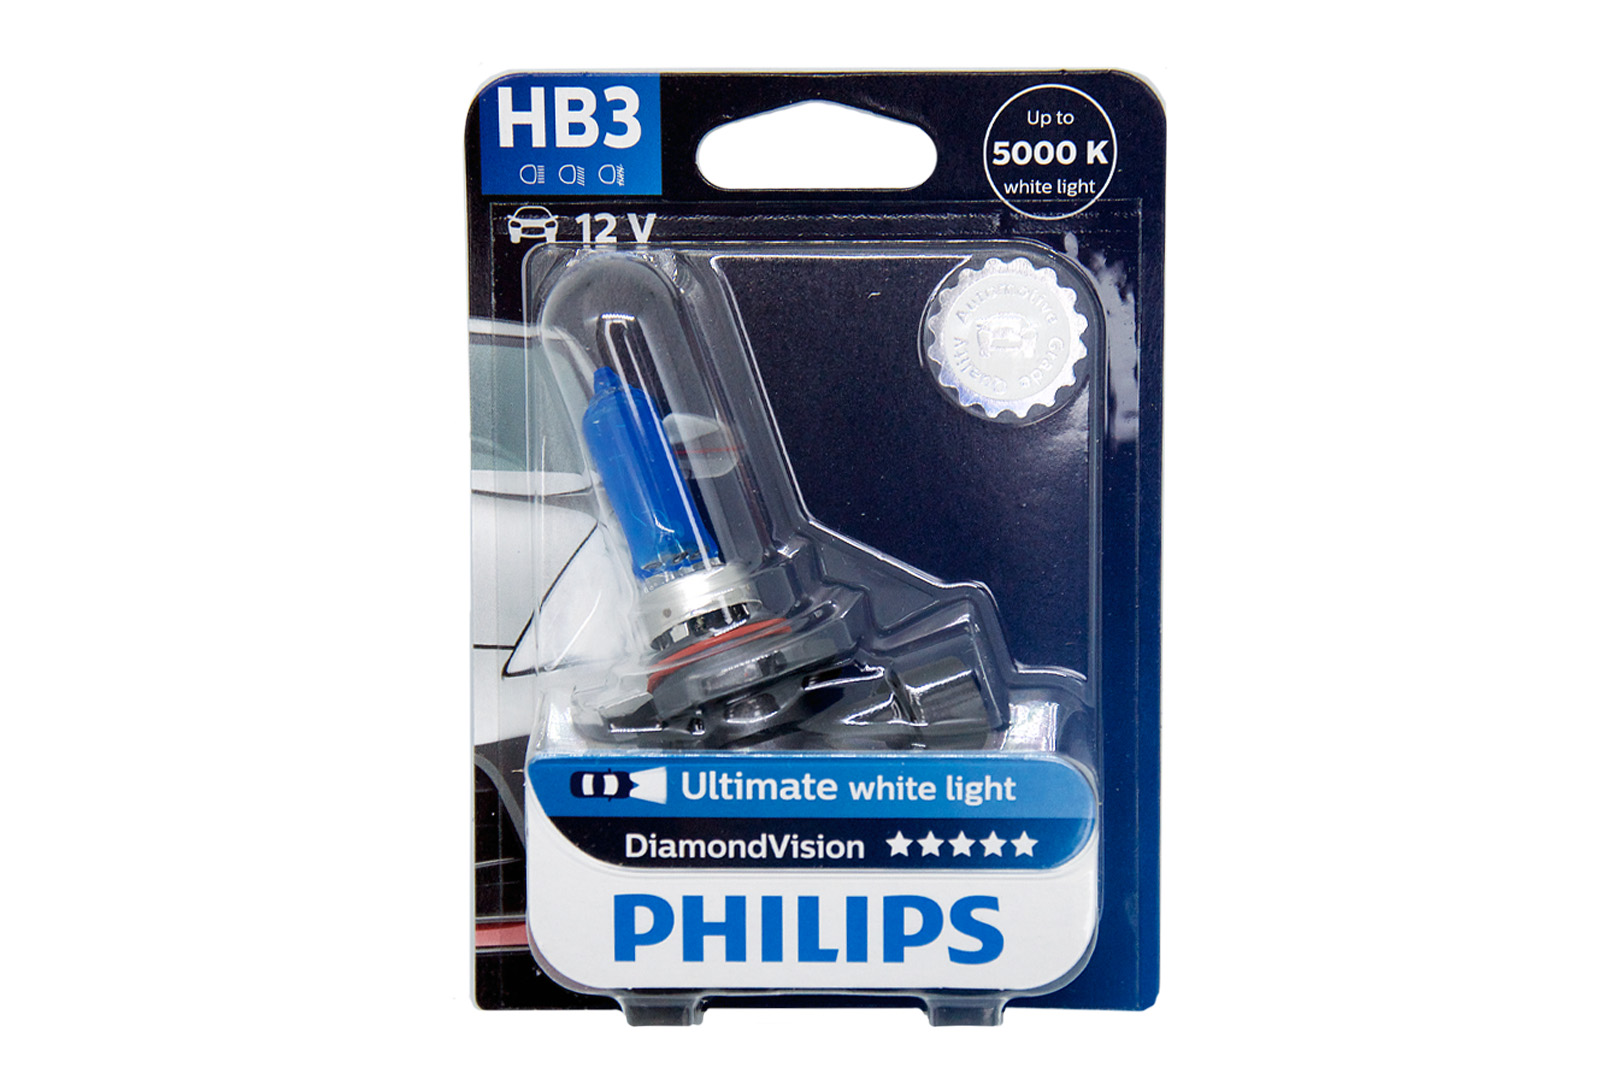 Филипс вижн. Philips hb3 5000 k 12v Diamond Vision. Лампы h27 Philips Diamond Vision. Philips Diamond Vision hb3 9005. Лампы Philips h4 55\60w-12v Diamond Vision 5000k.